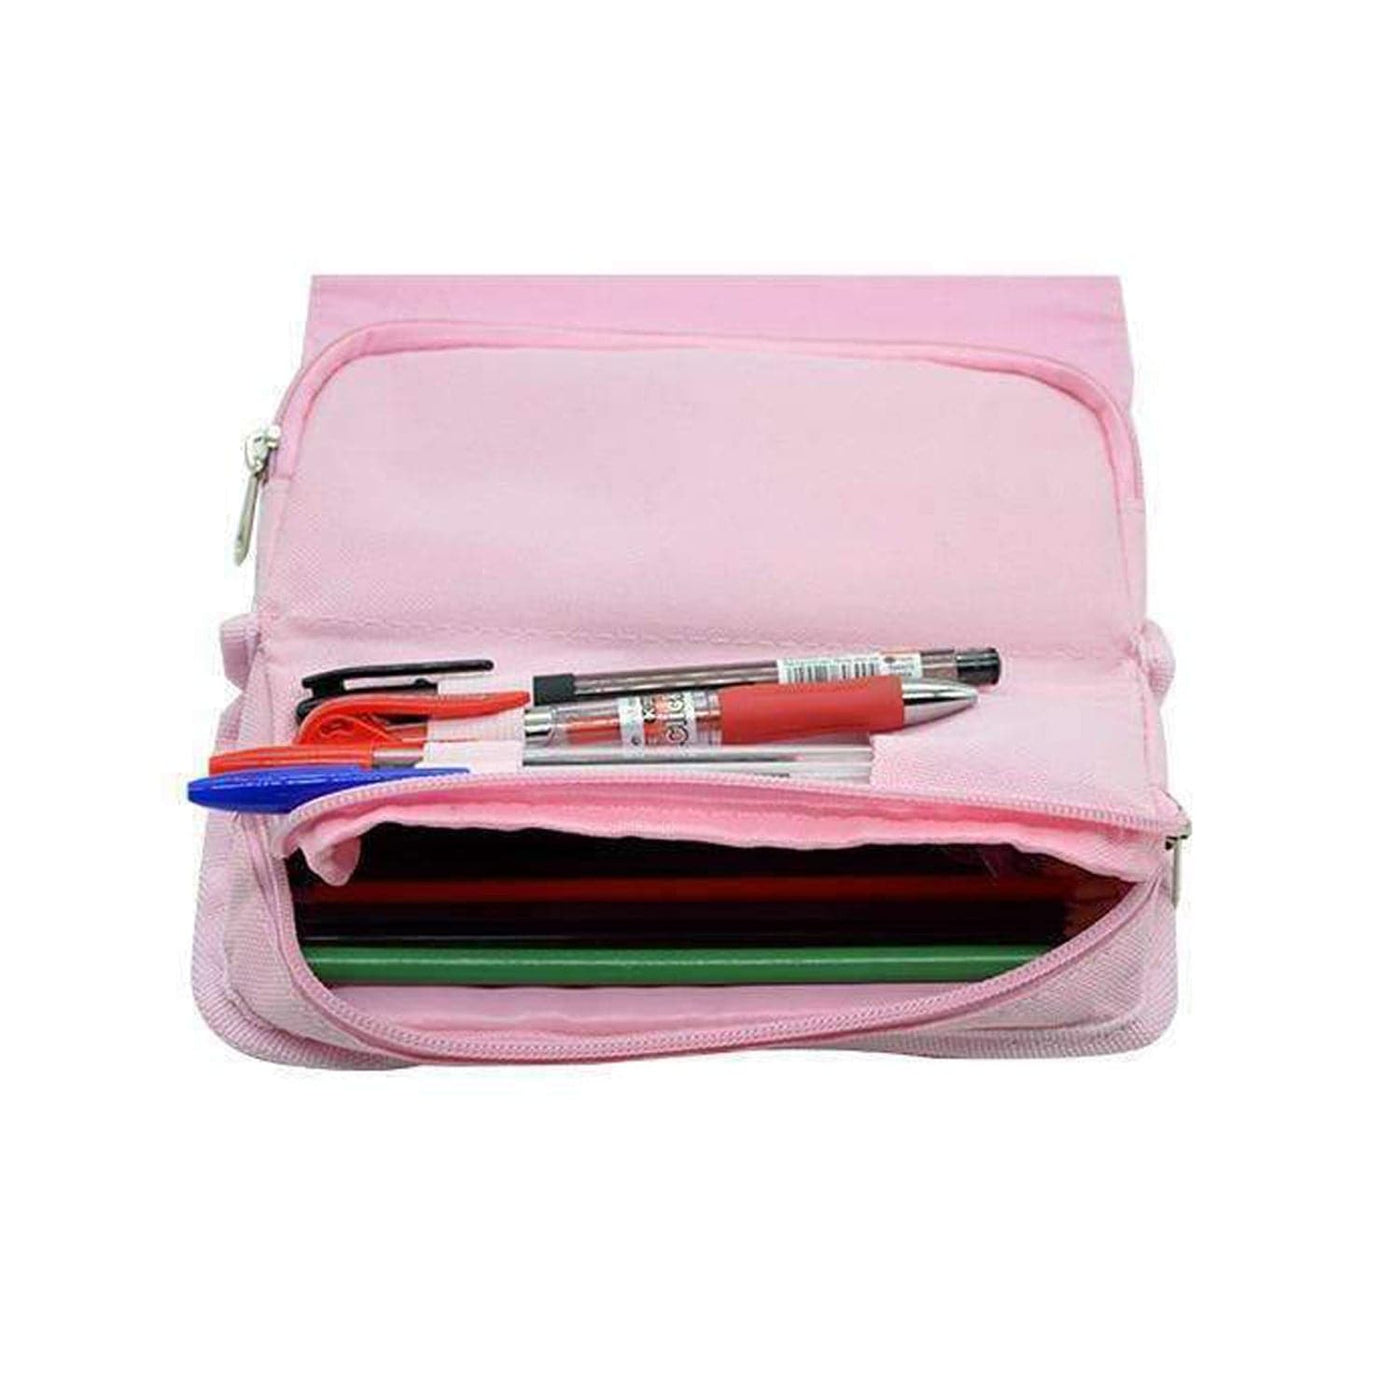 Travel More - Travel Pencil Case